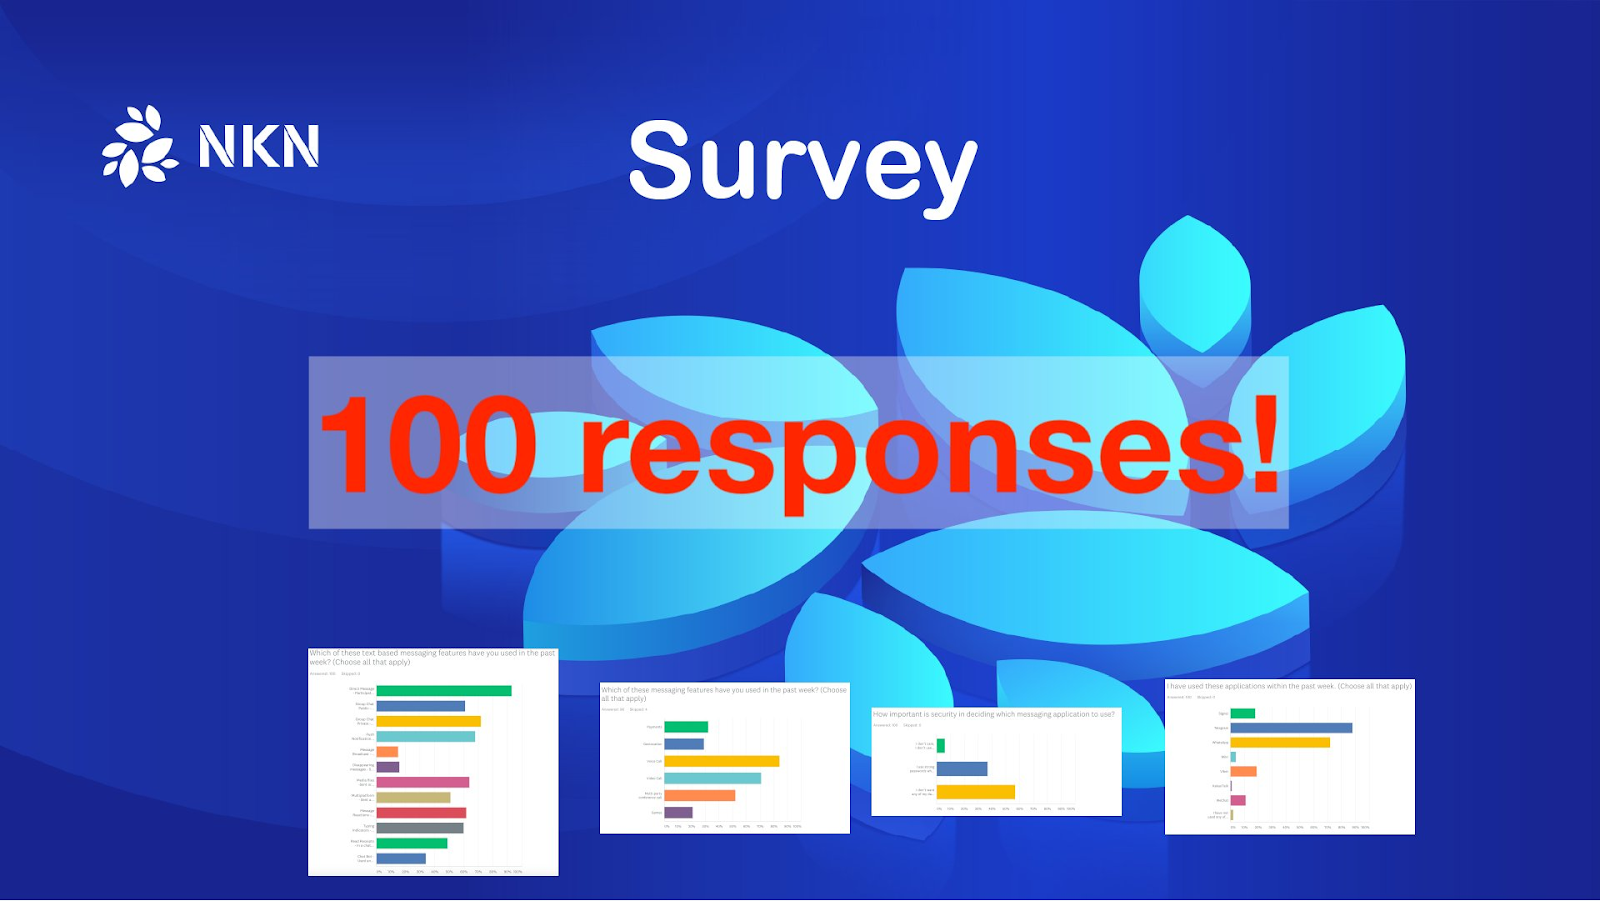 NKN mobile app survey results